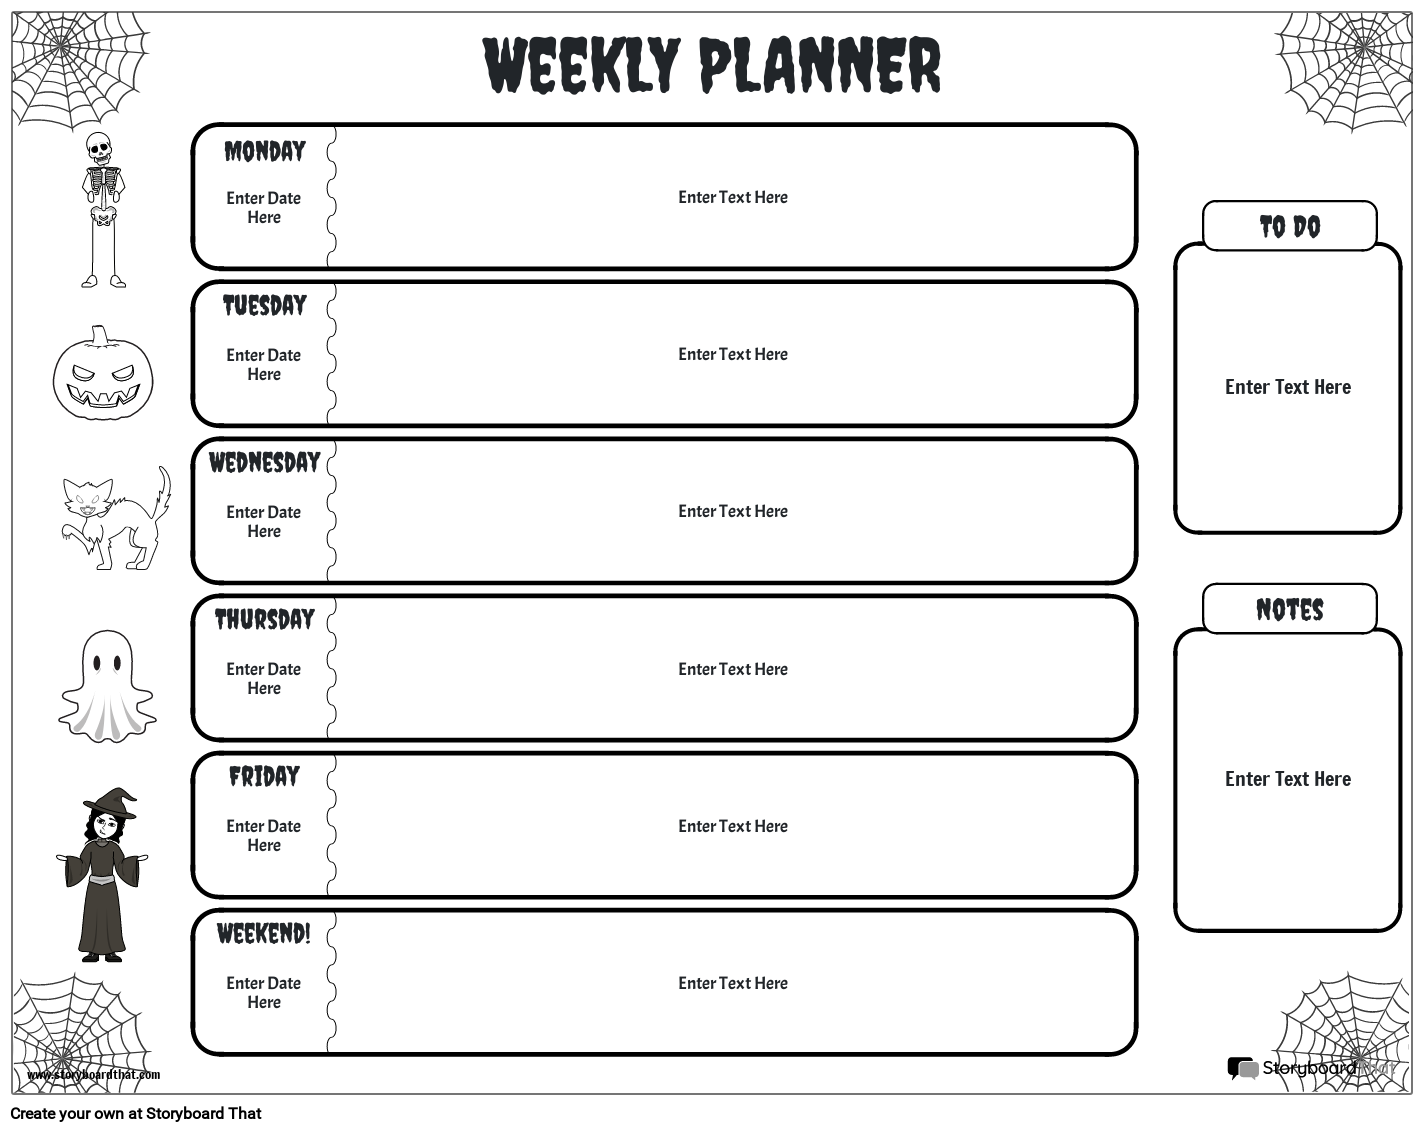 bw-weekly-planner-2-storyboard-von-lt-examples